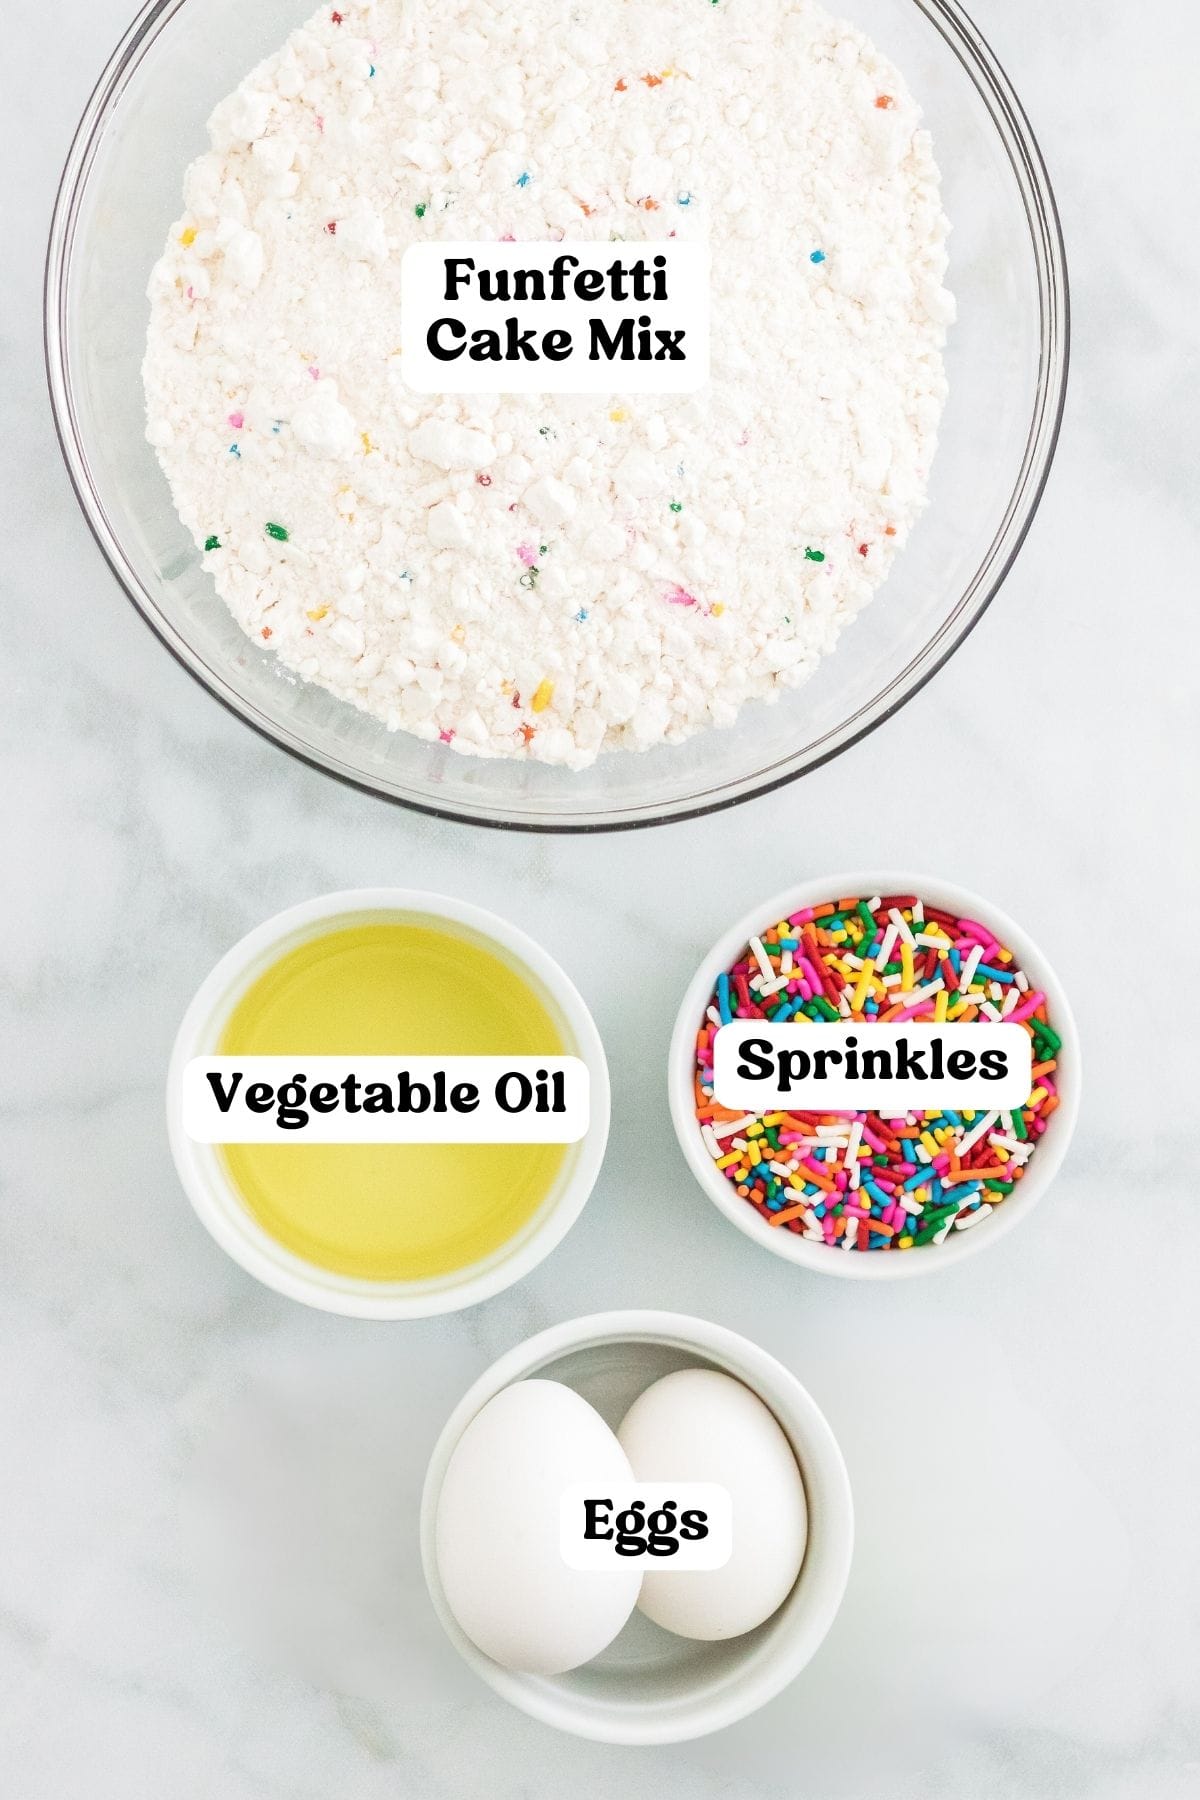 Funfetti cake mix, vegetable oil, rainbow sprinkles, and 2 eggs.